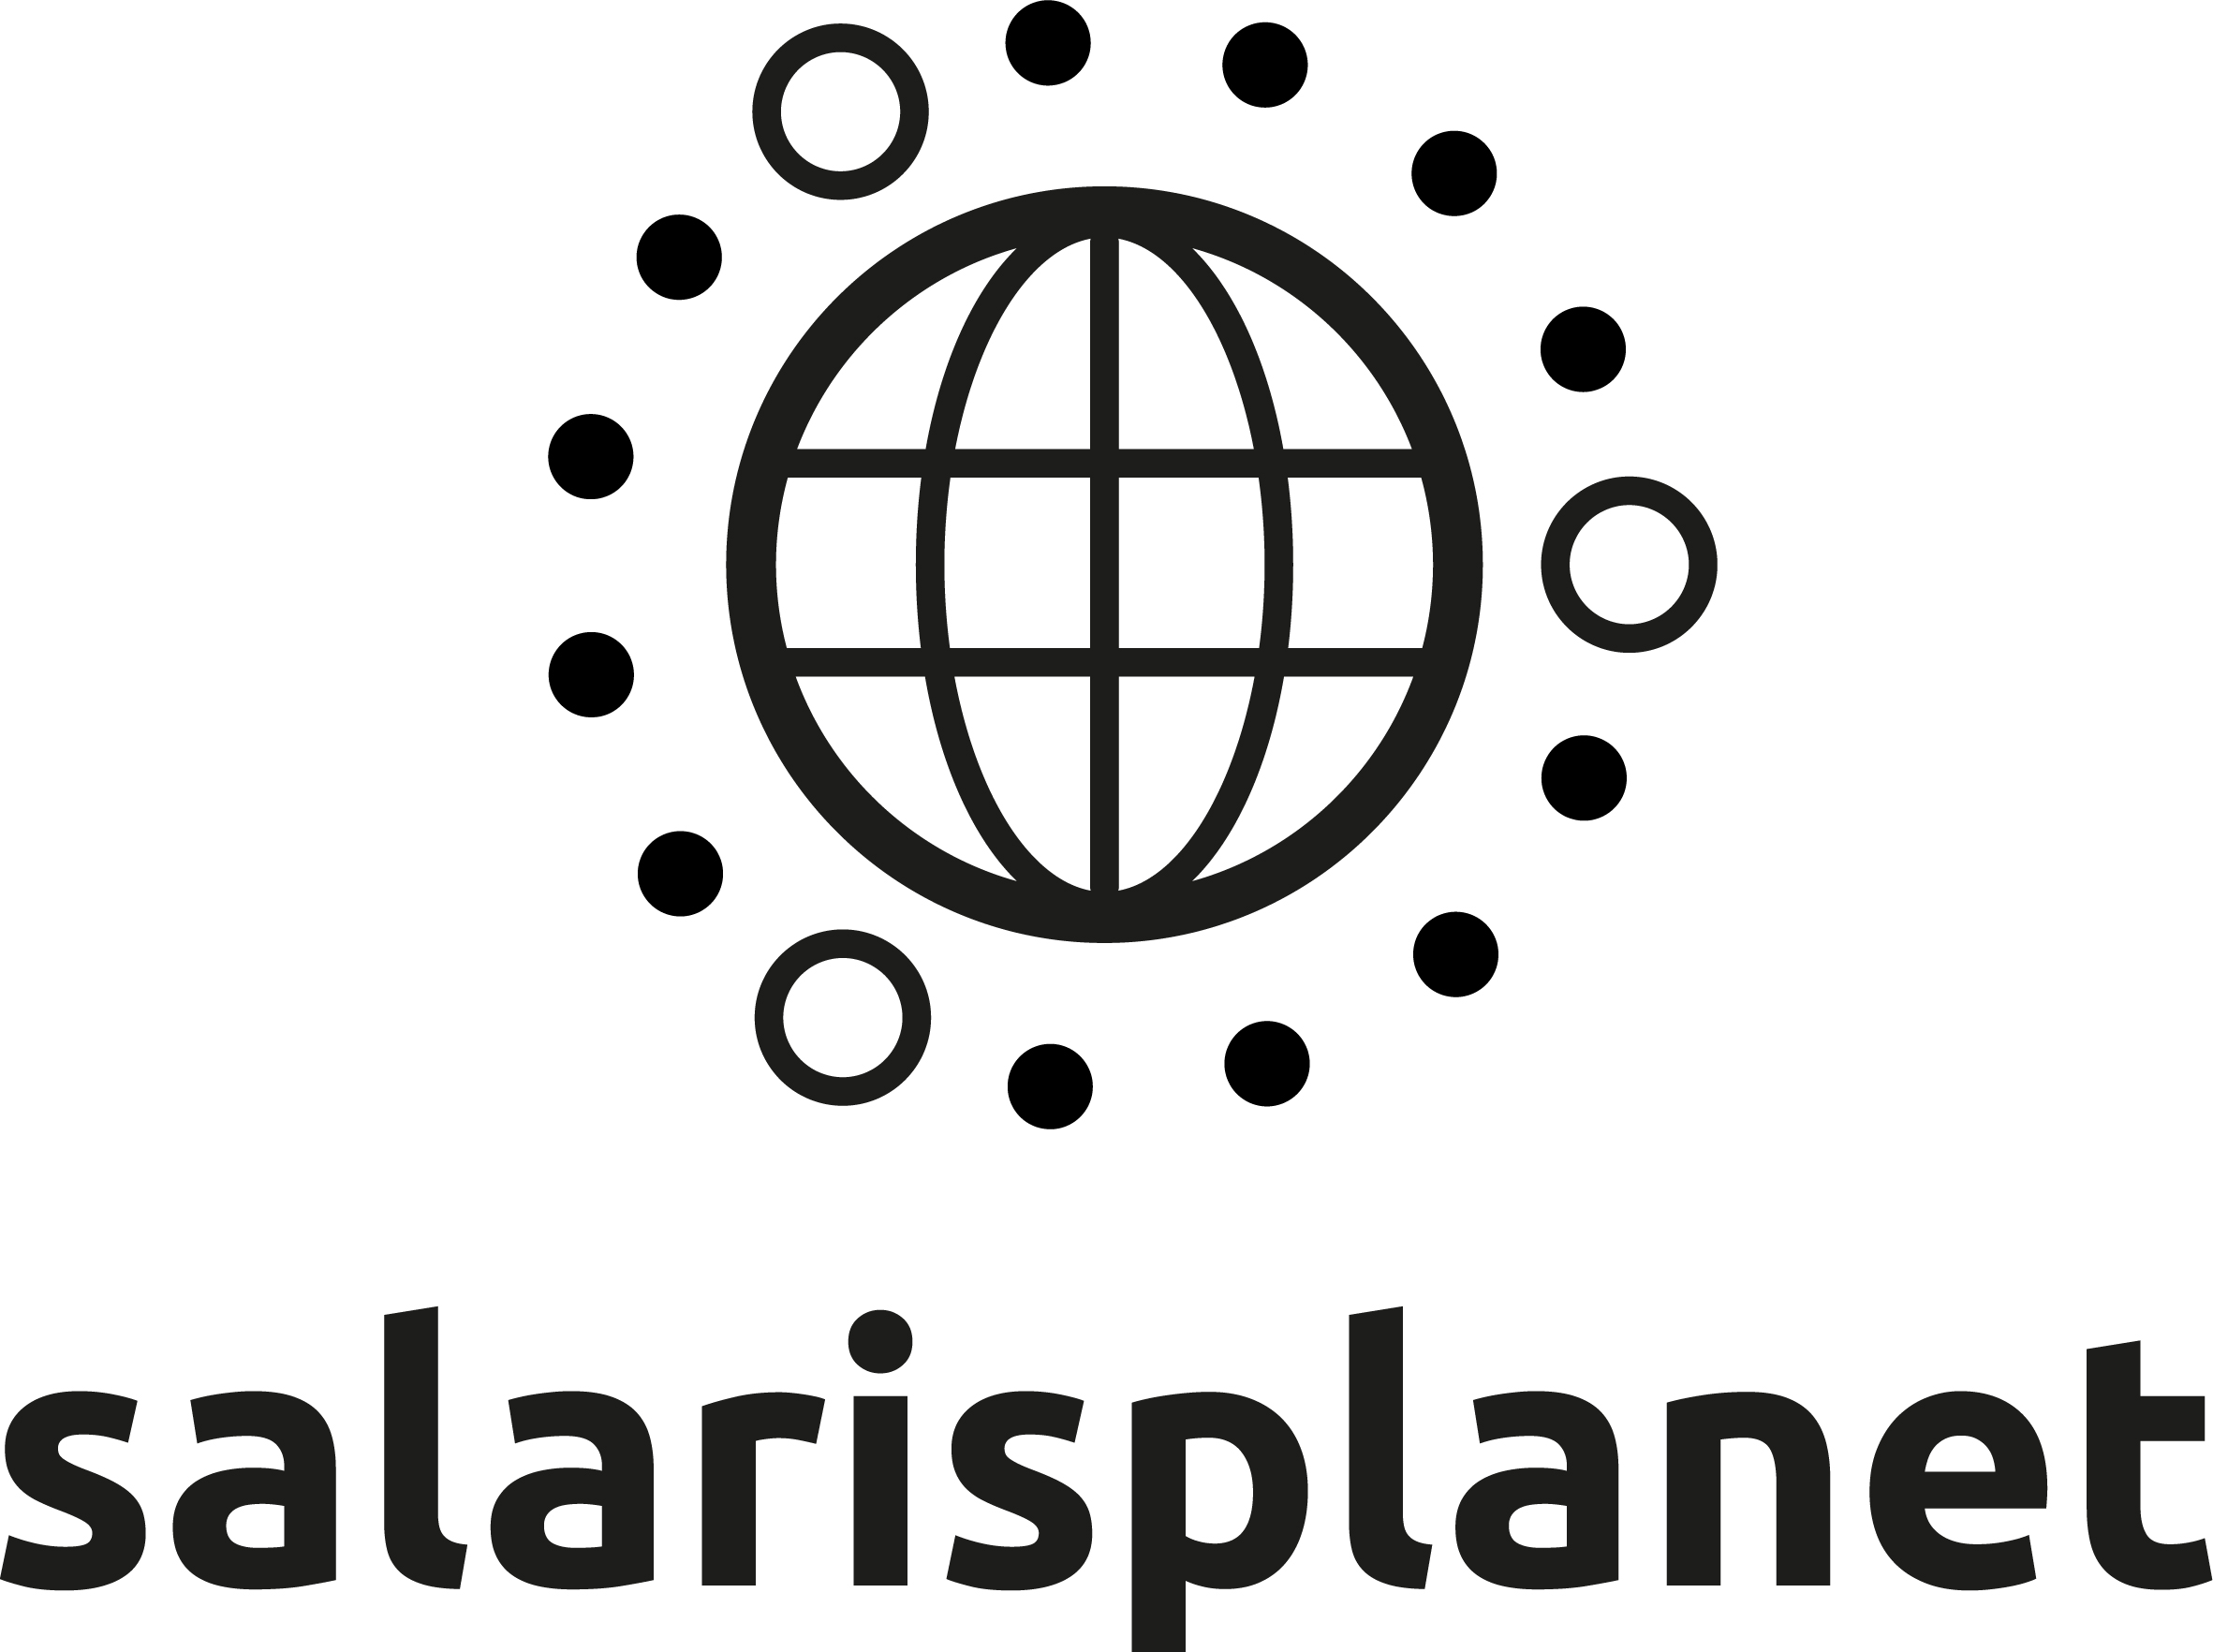 http://svlottum.nl/wp-content/uploads/2020/10/Salarisplanet-logo-01.jpg